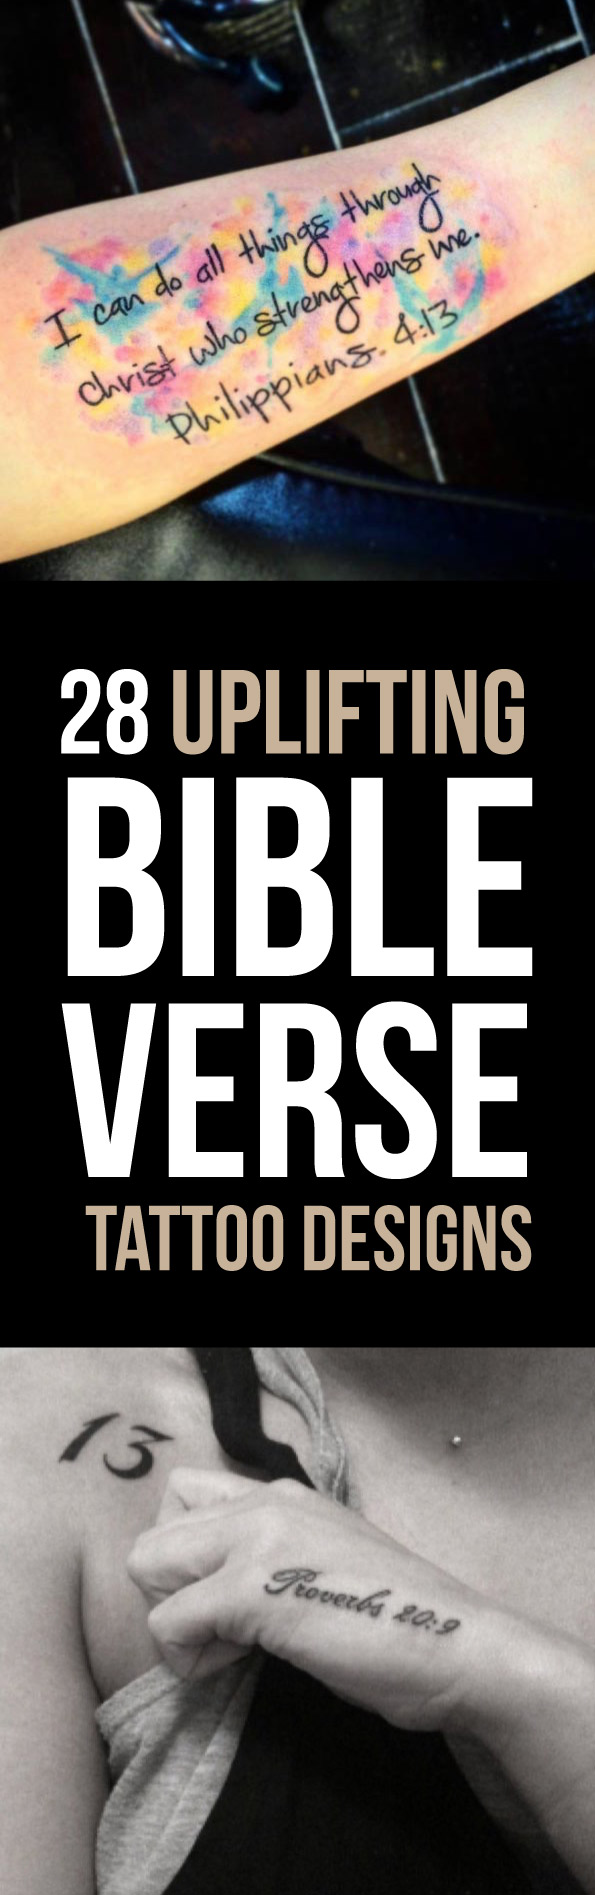 28 Uplifting Bible Verse Tattoos | TattooBlend